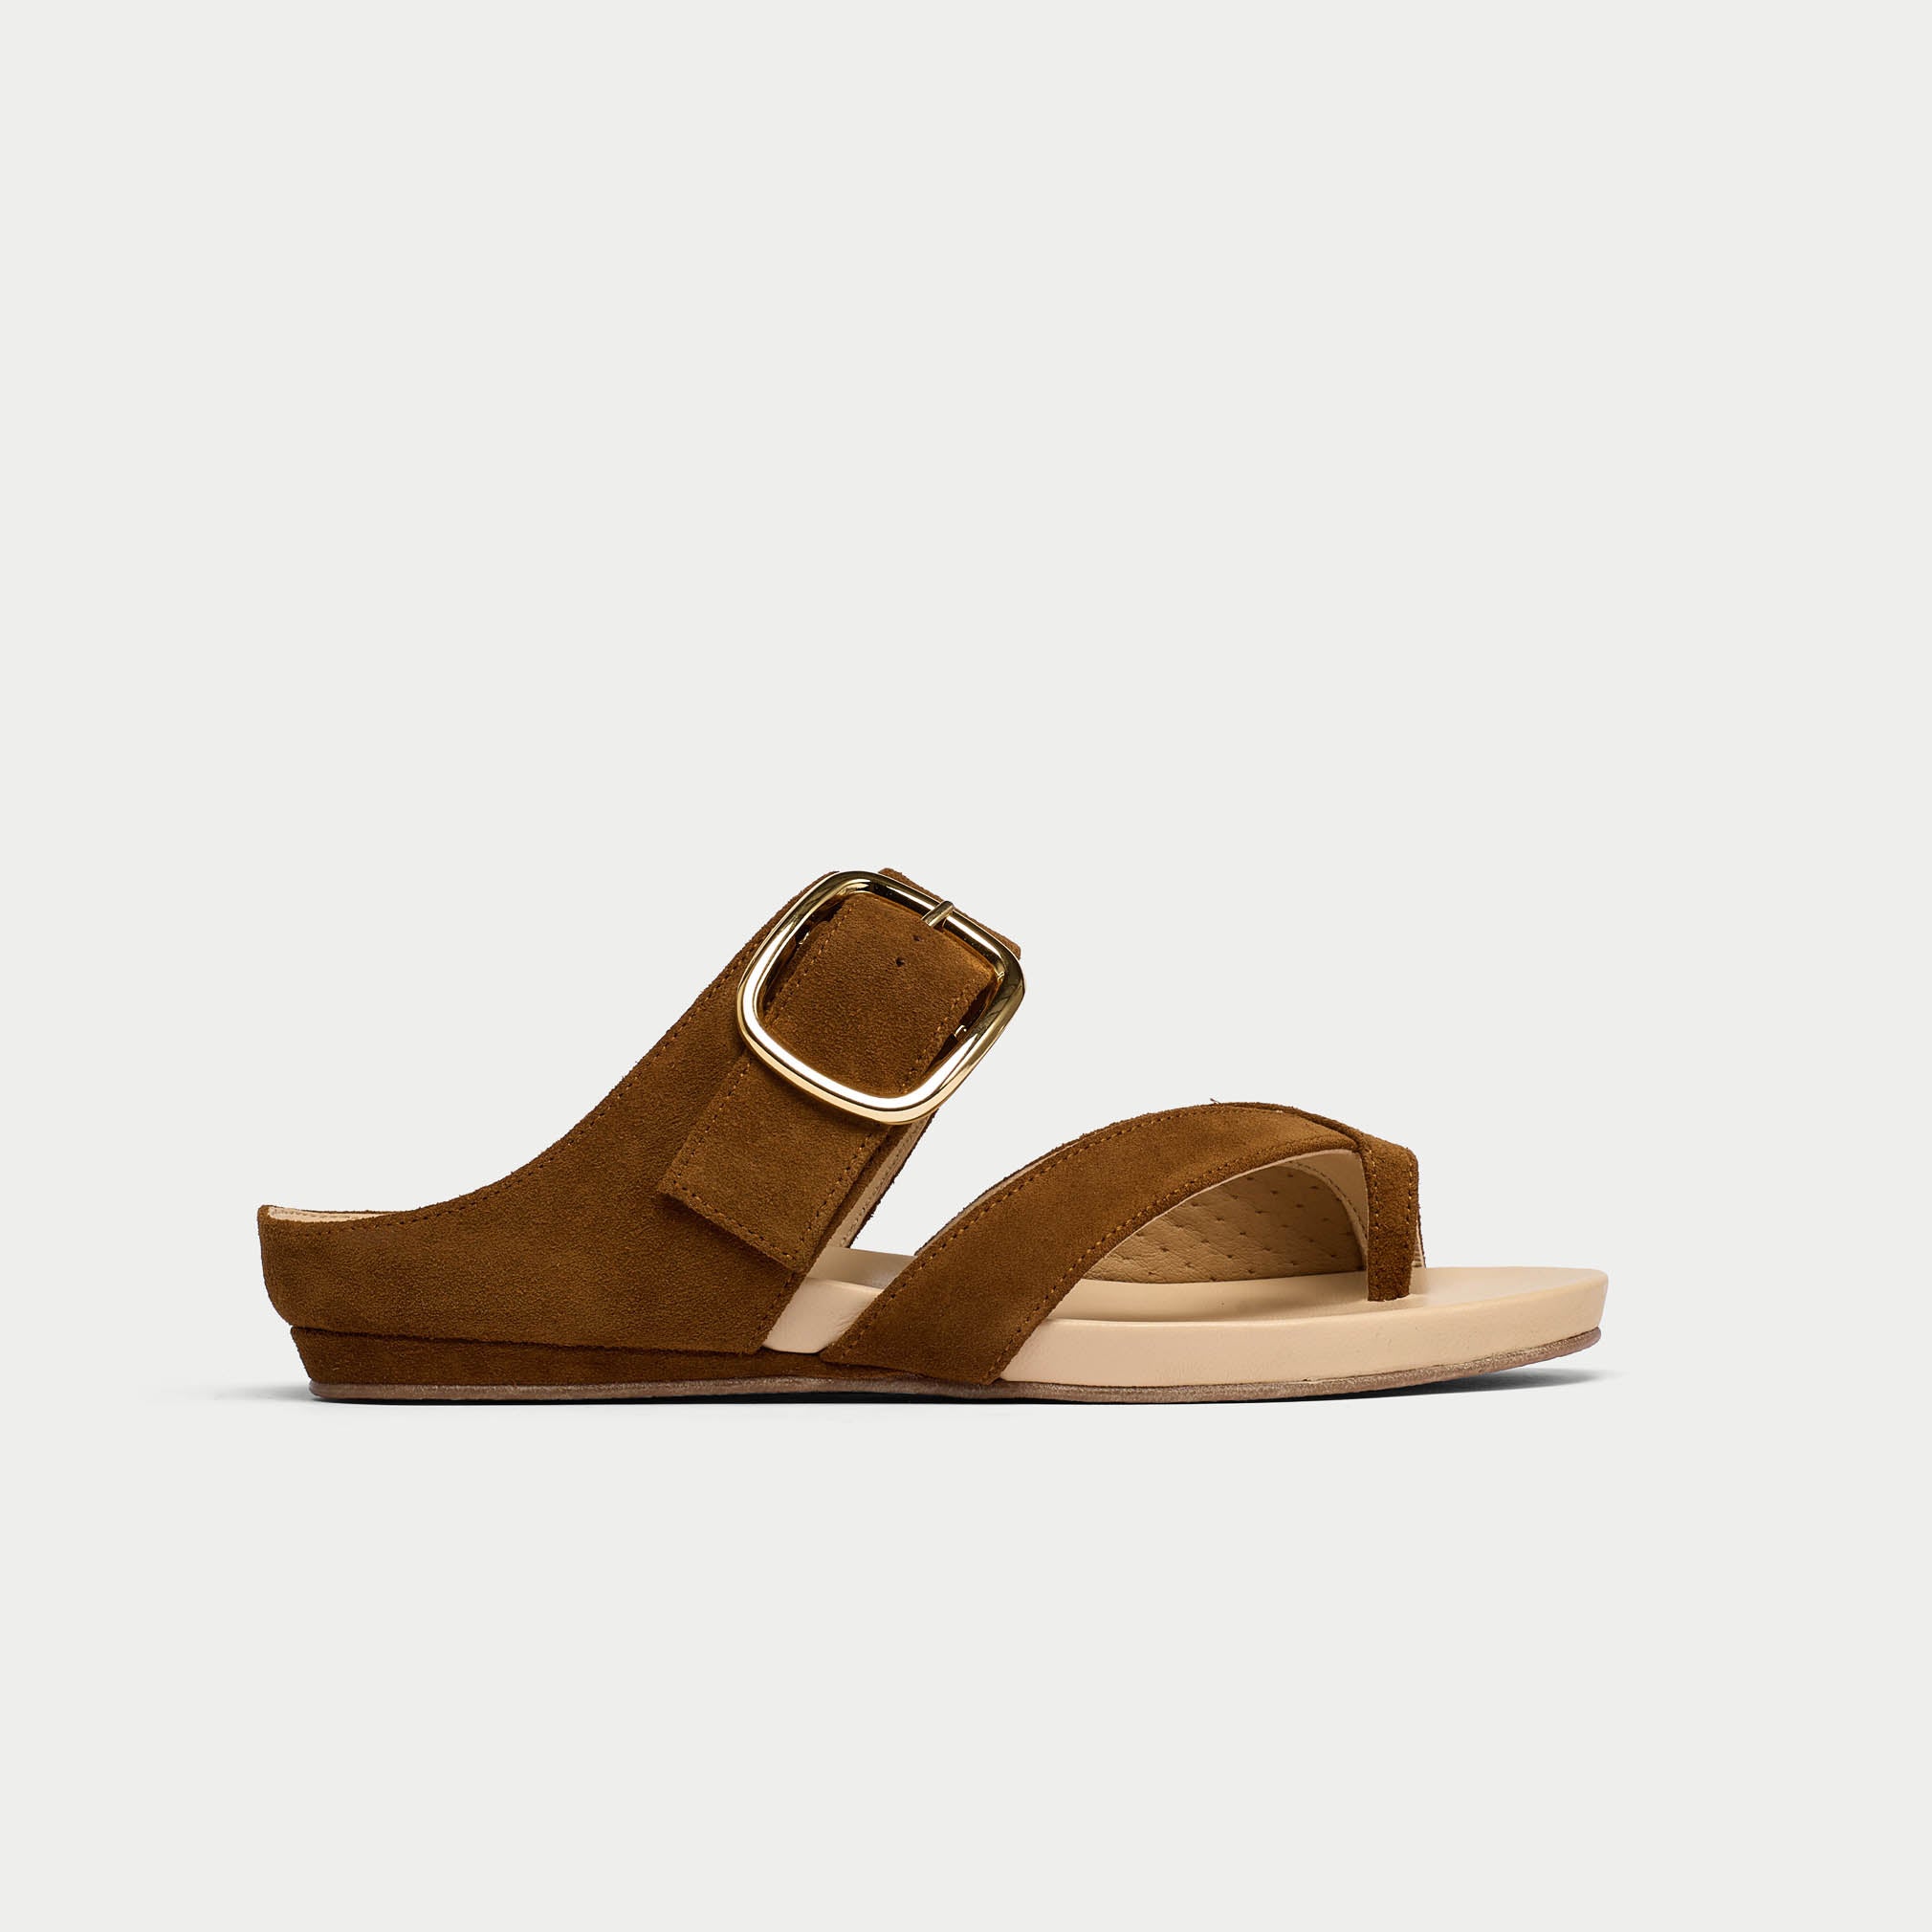 Sandals for Bunions UK: Comfy & Fashionable, Bunion-Hiding – Calla Shoes